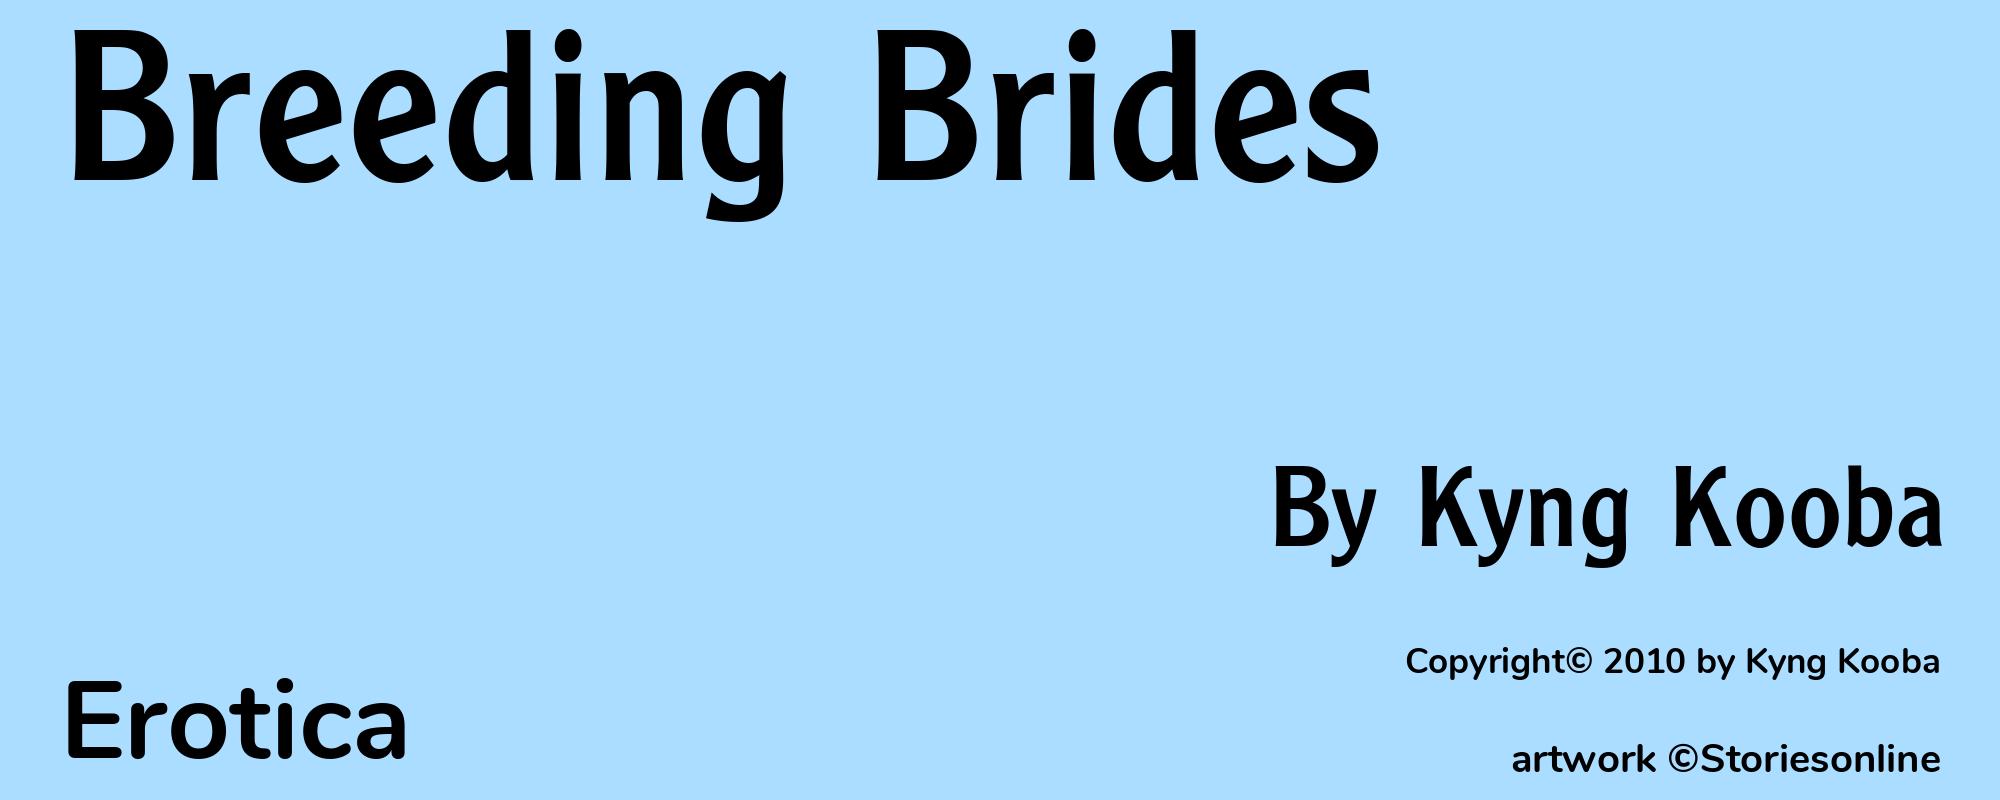 Breeding Brides - Cover